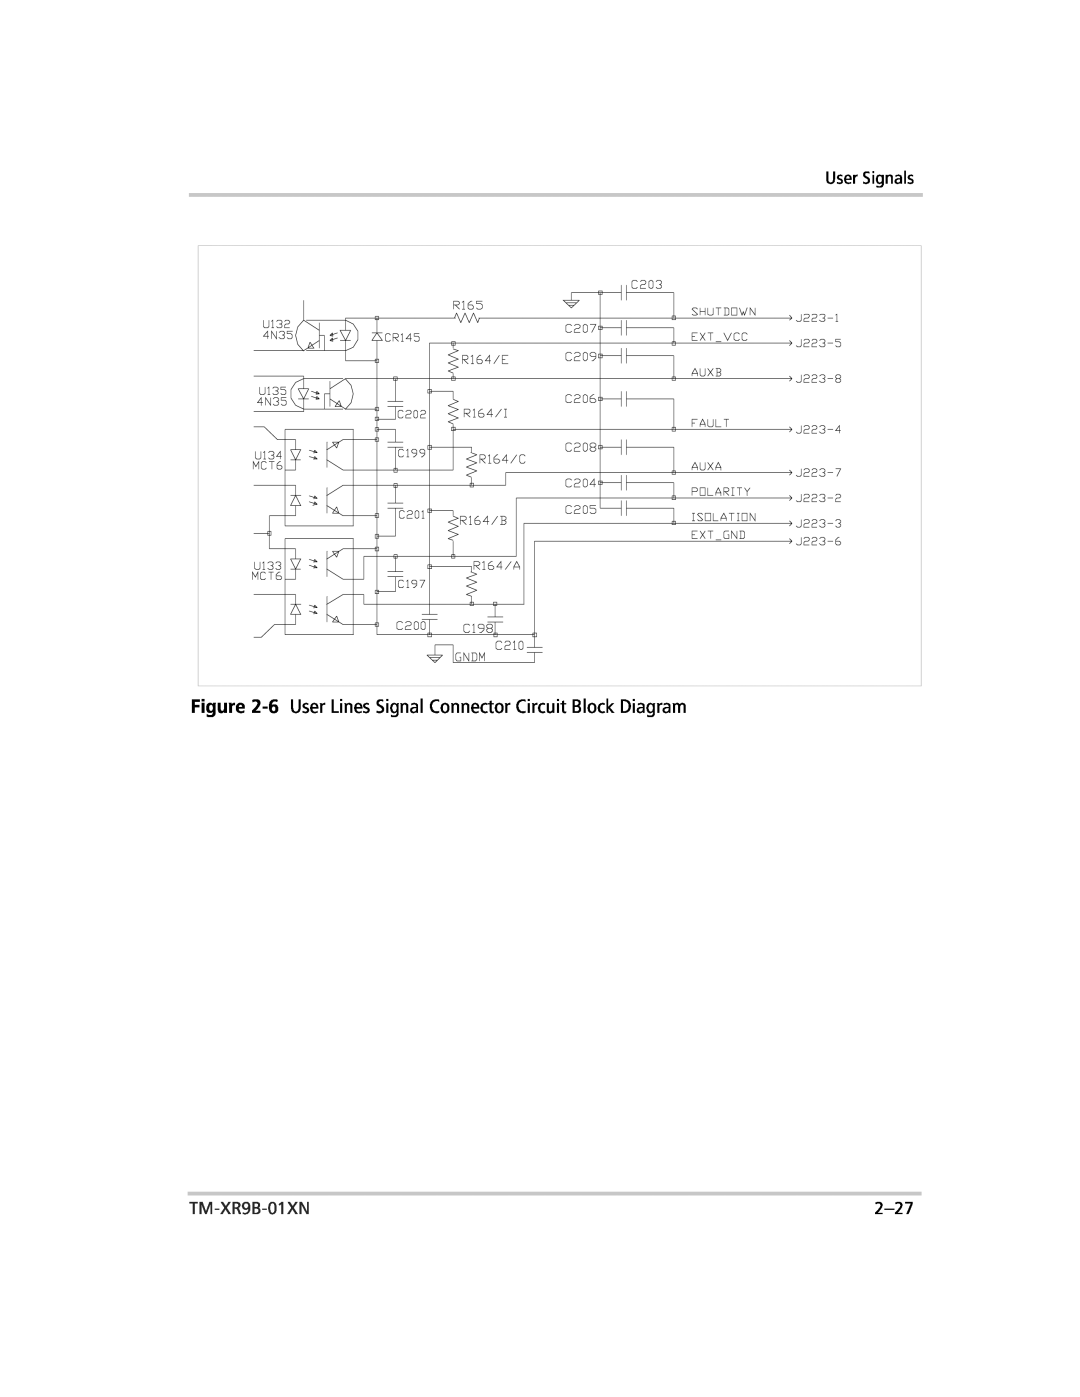 Xantrex Technology ENET-XFR3 manual User Signals, User Lines Signal Connector Circuit Block Diagram, TM-XR9B-01XN, 2-27 